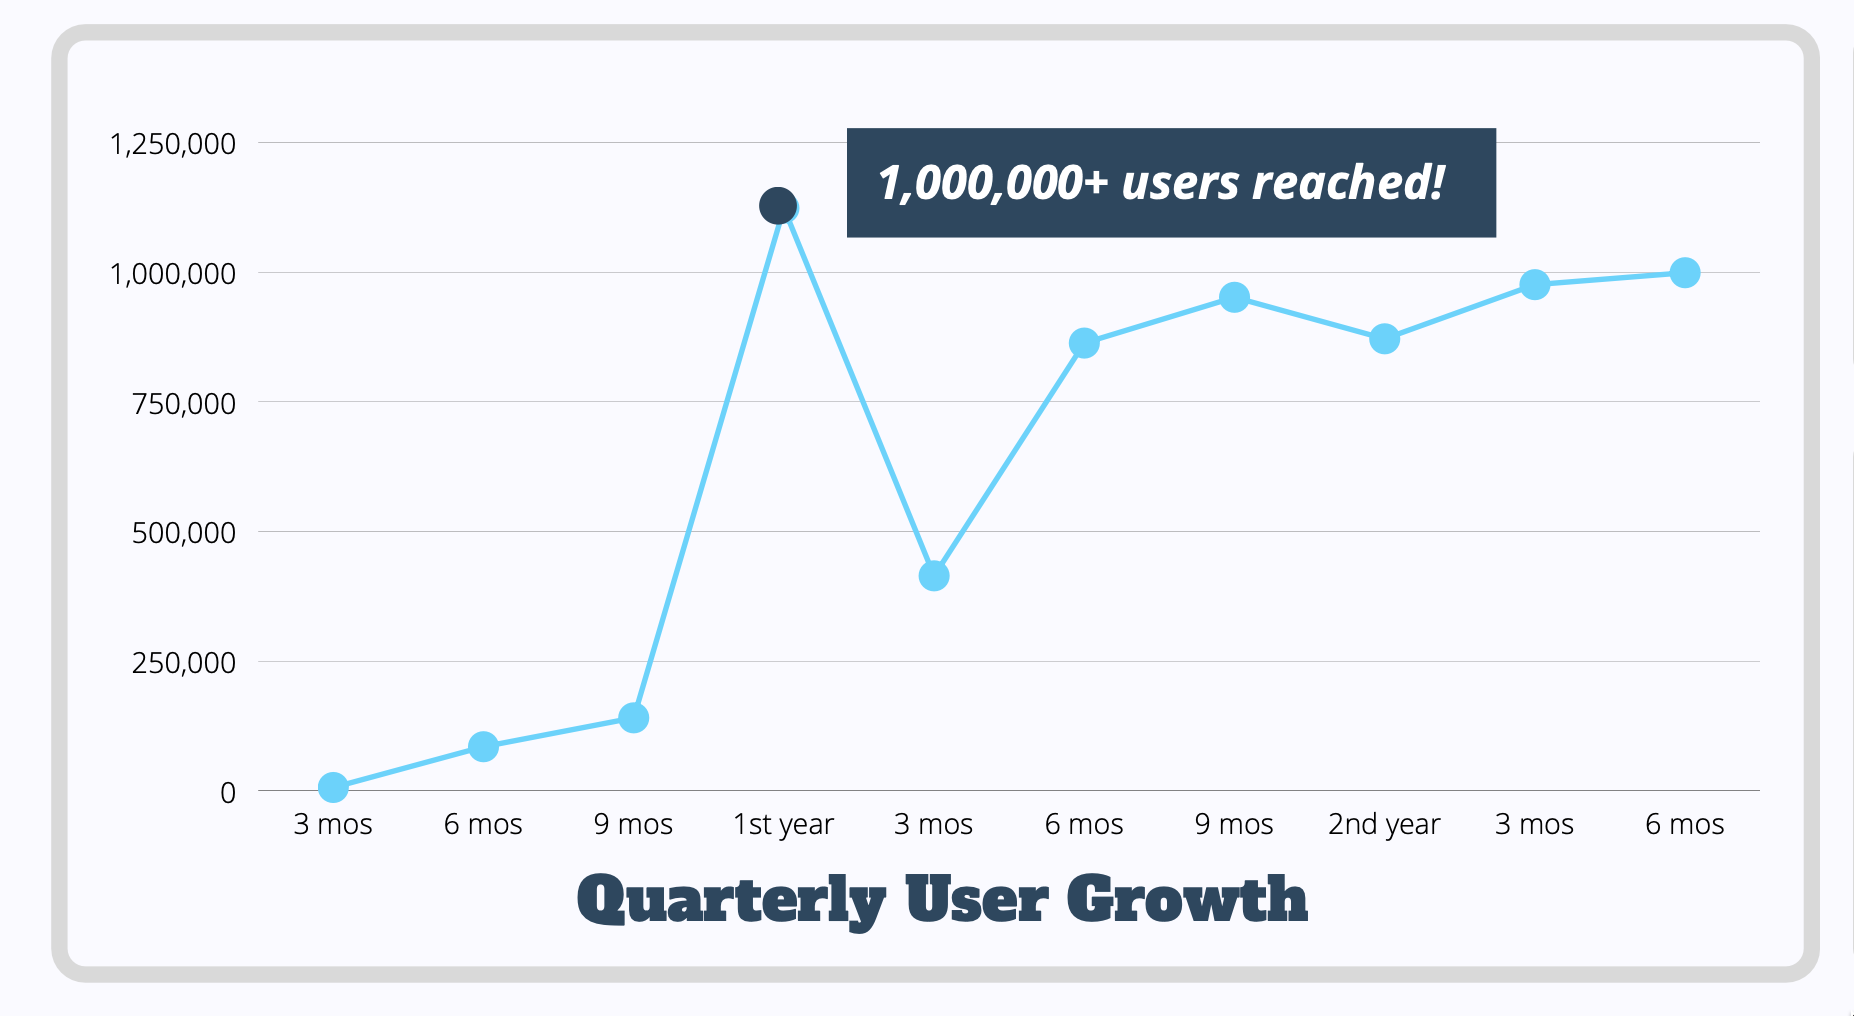 ImportYeti's Quarterly User Growth